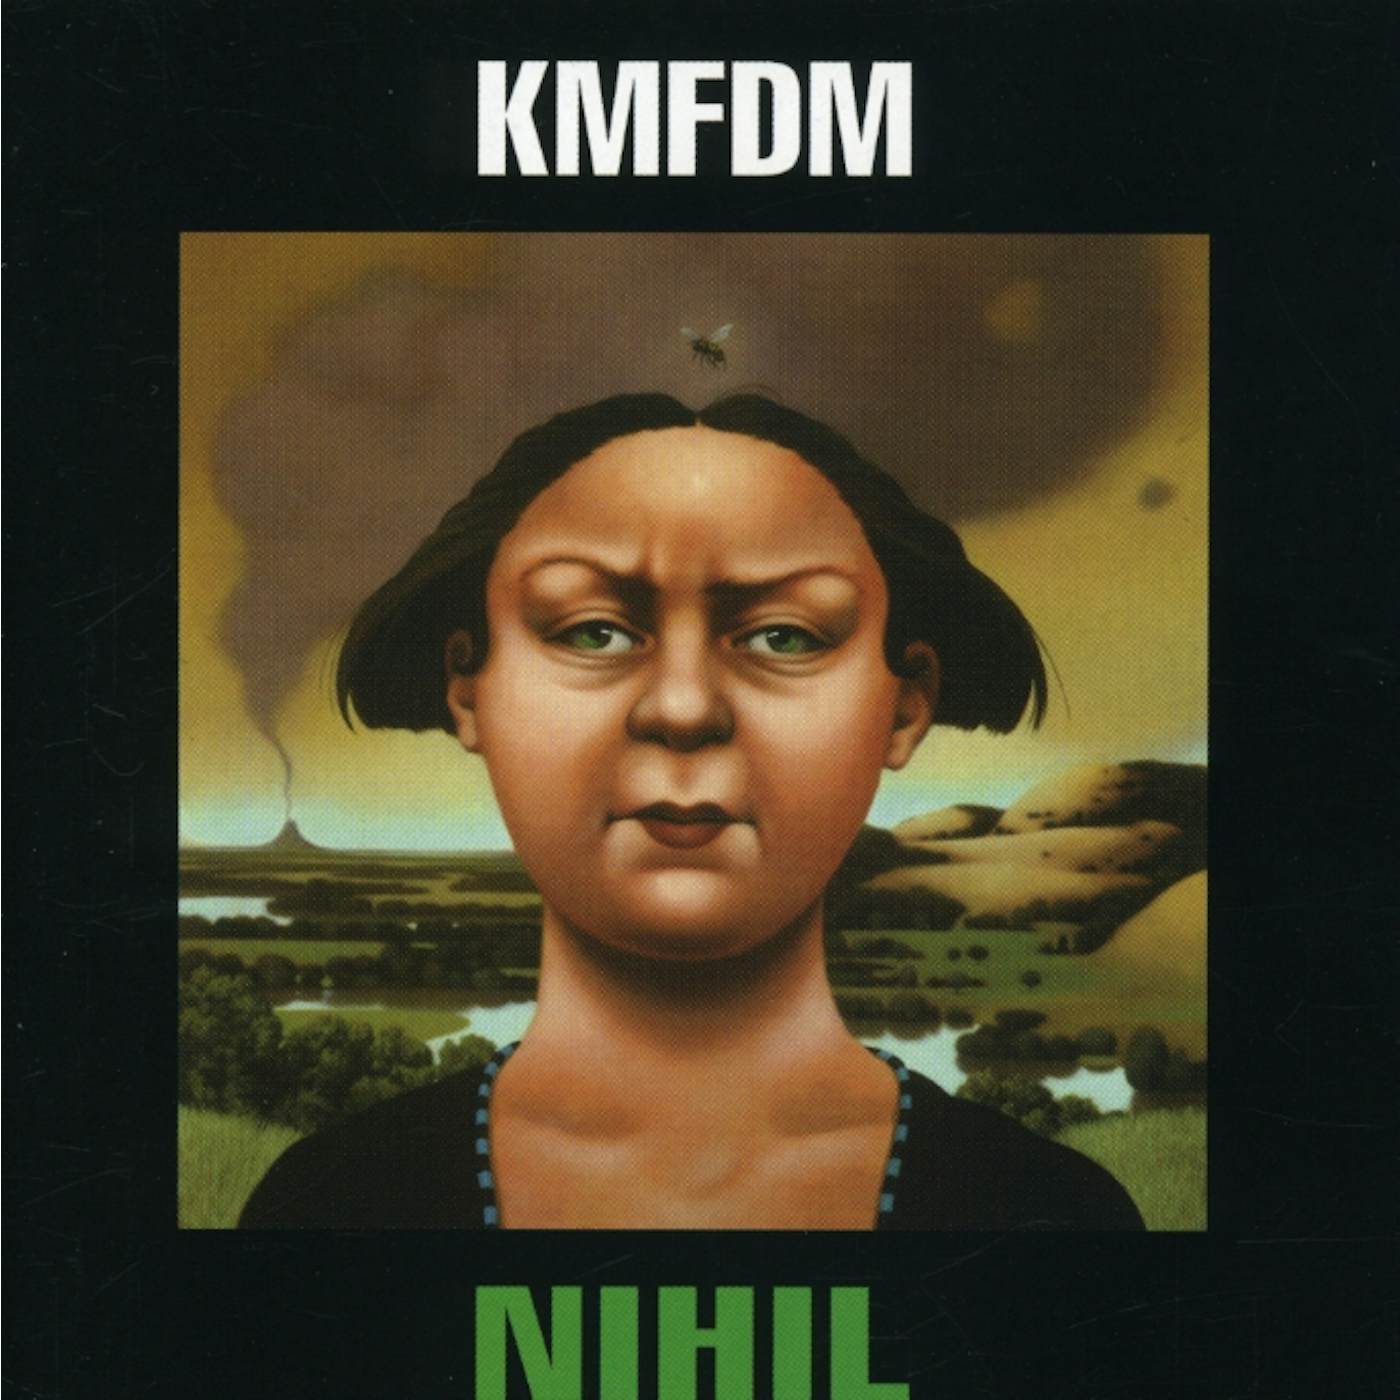 KMFDM NIHIL CD